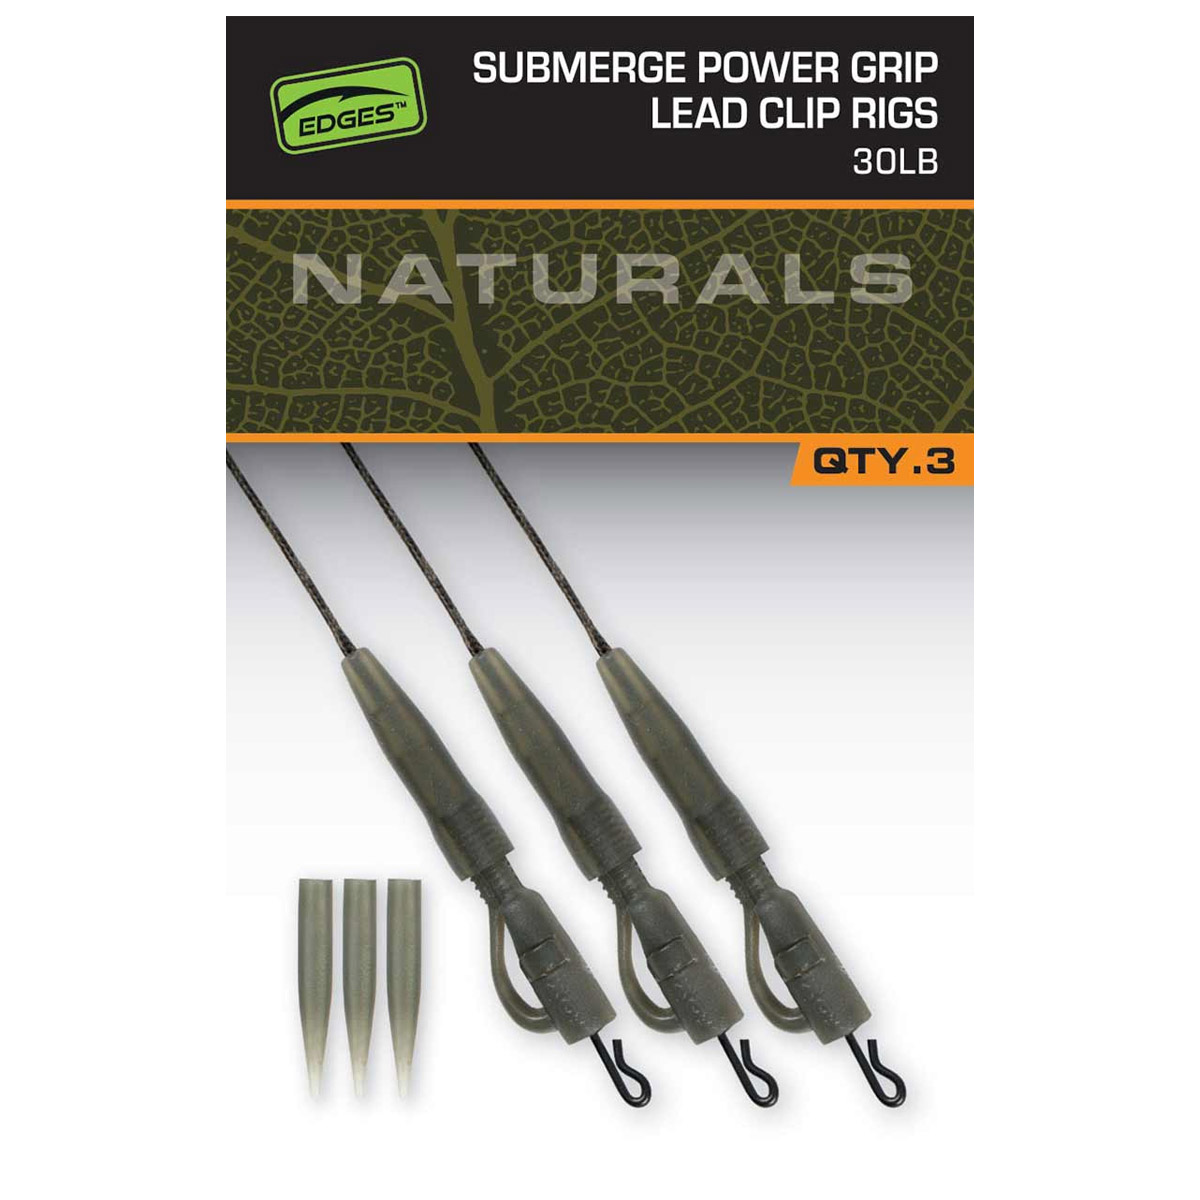 Fox Edges Naturals Submerge Power Grip Leadclip Leaders -  30 lbs